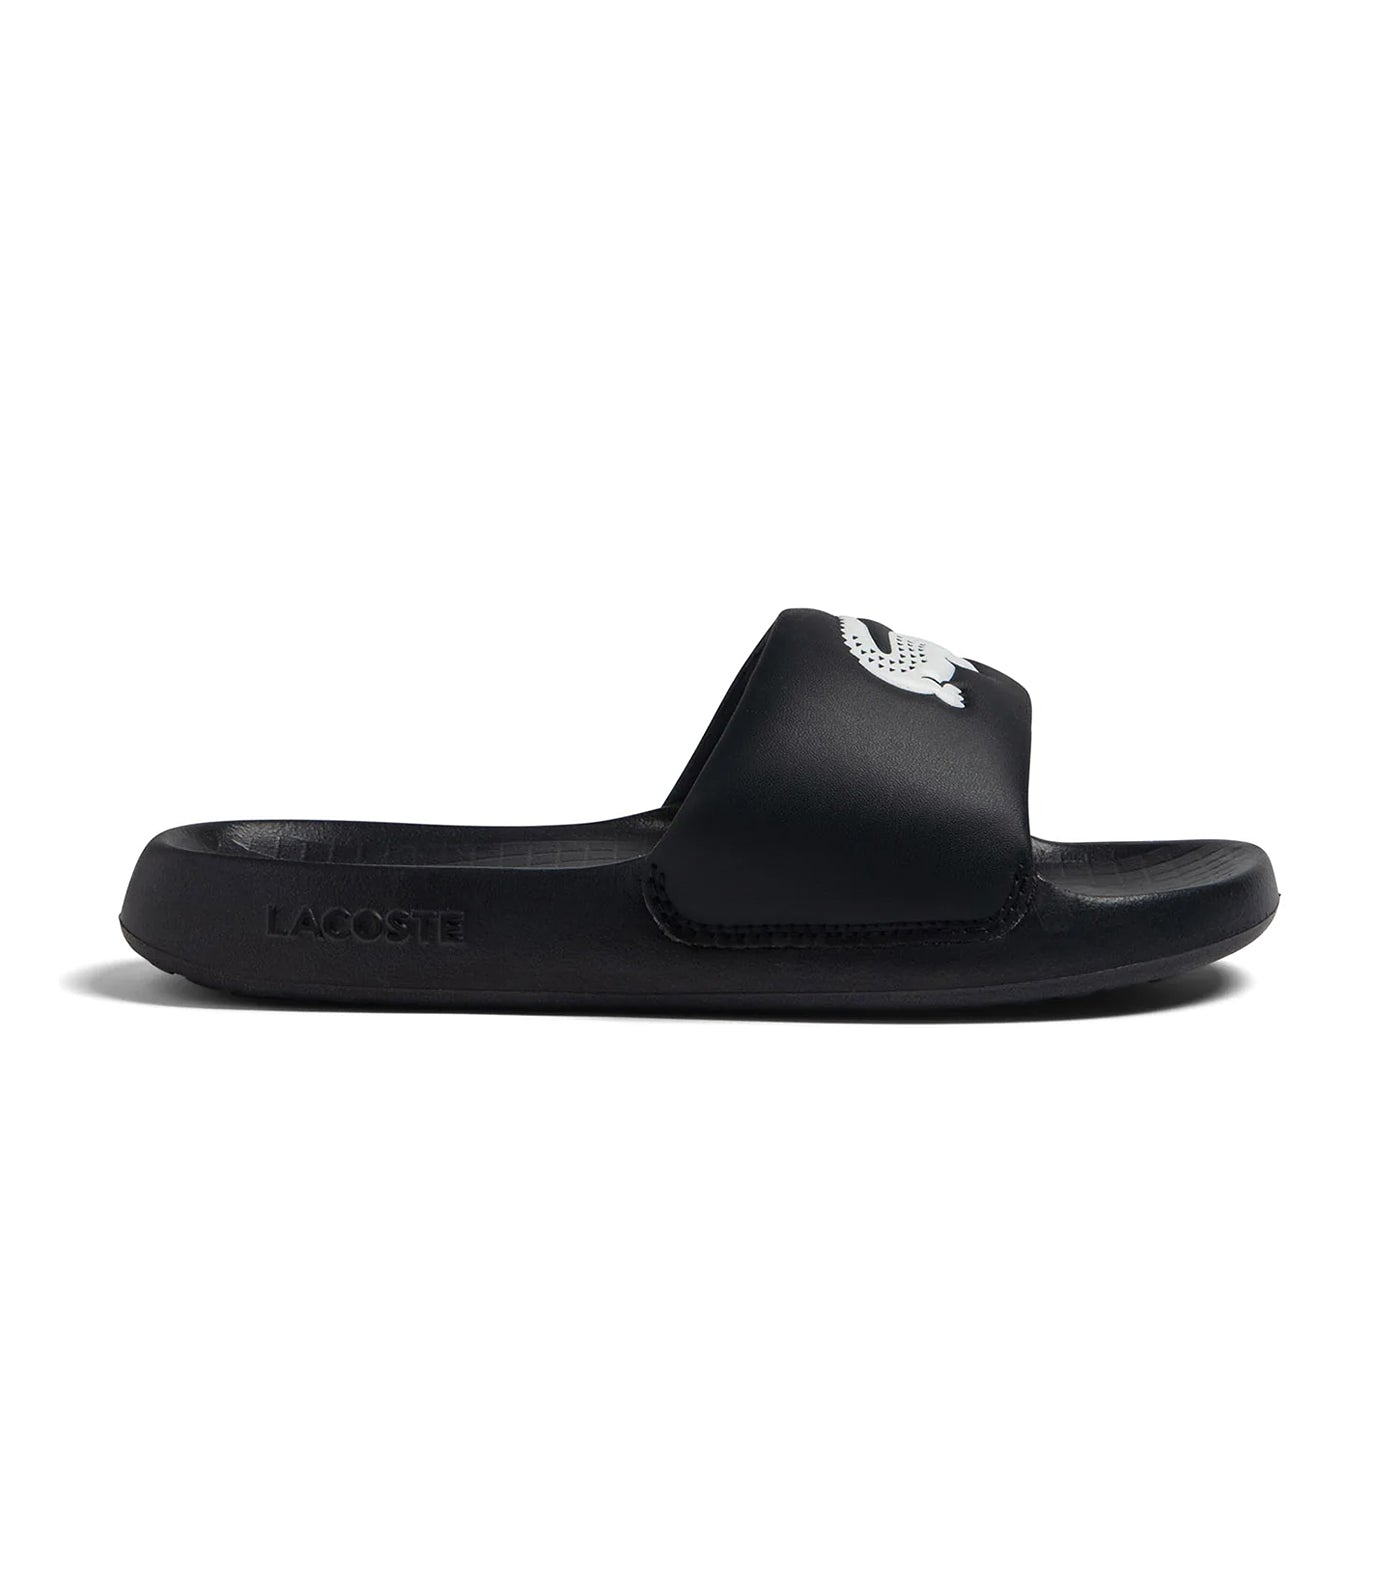 Men's Croco 1.0 Synthetic Slides Black/White